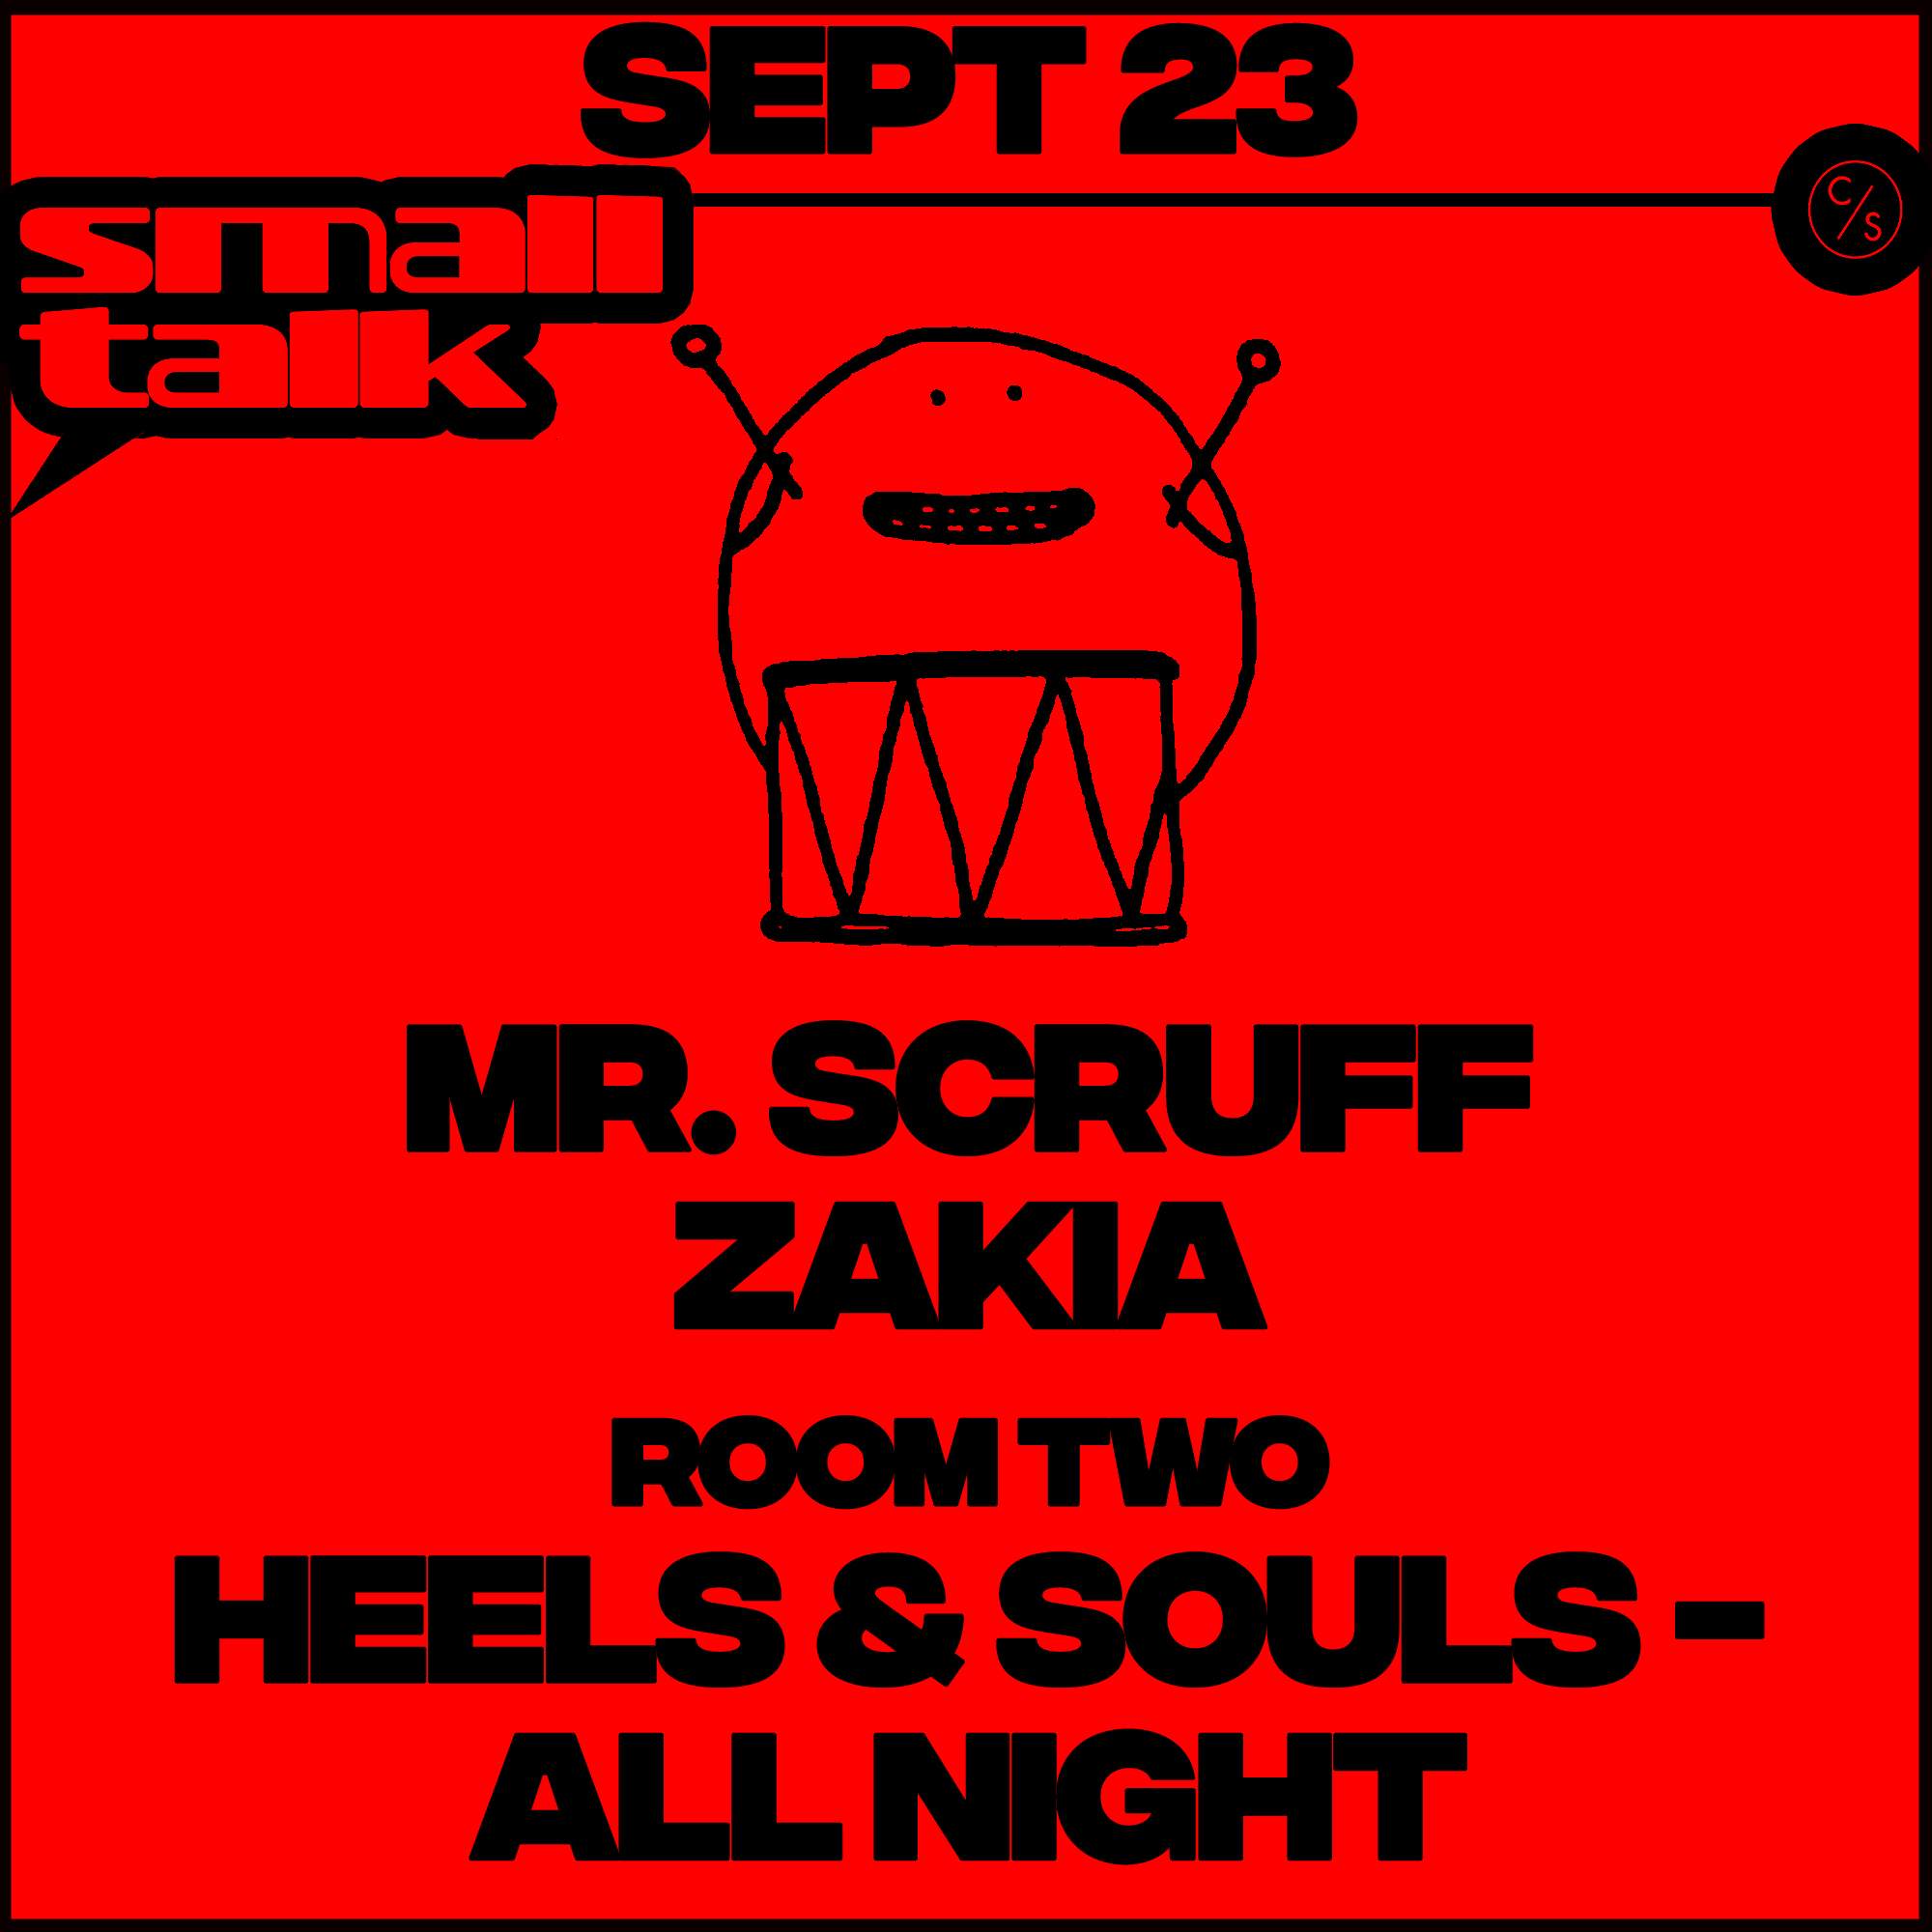 Small Talk with Mr Scruff, Zakia, Heels & Souls - Flyer back